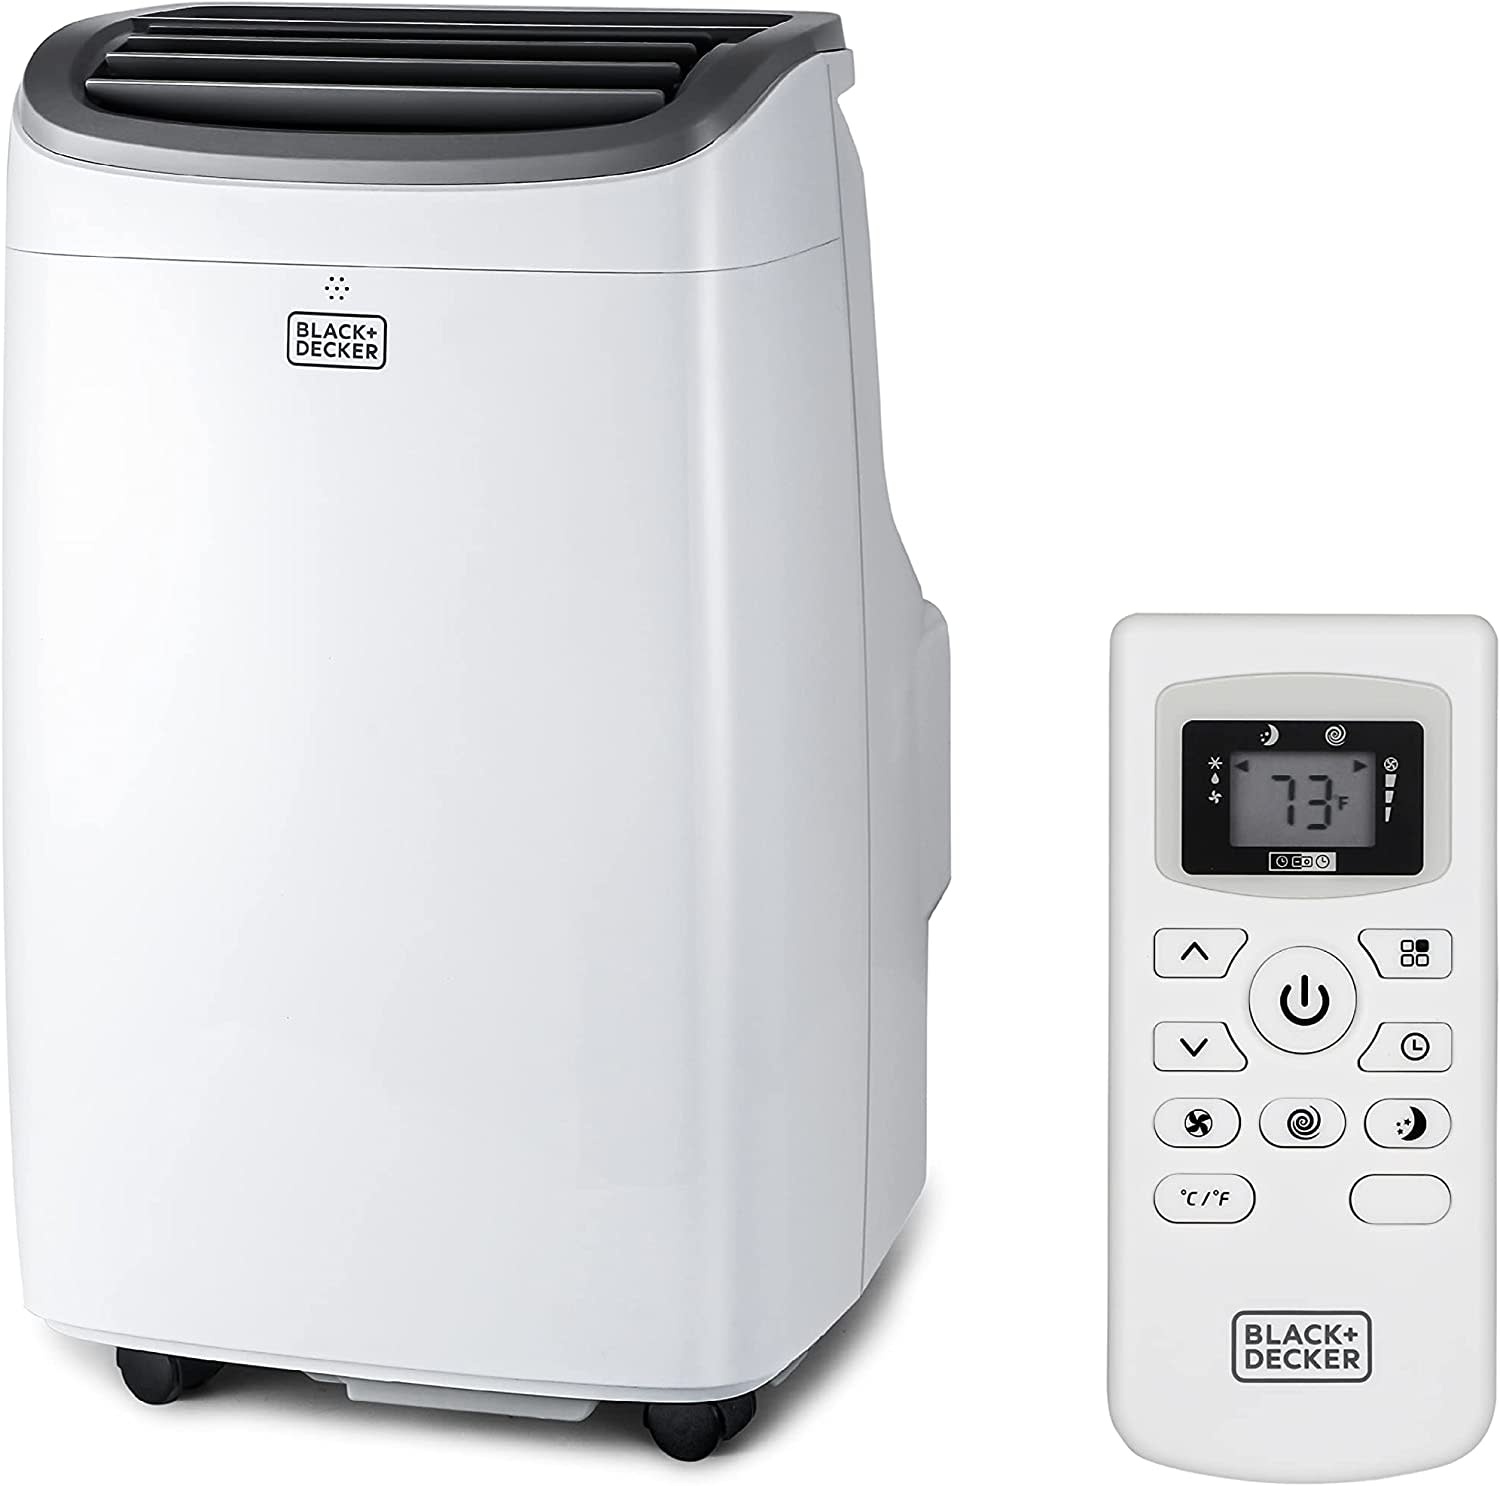 BLACK+DECKER 8,000 BTU Portable Air Conditioner with Remote Control, White  819813013158